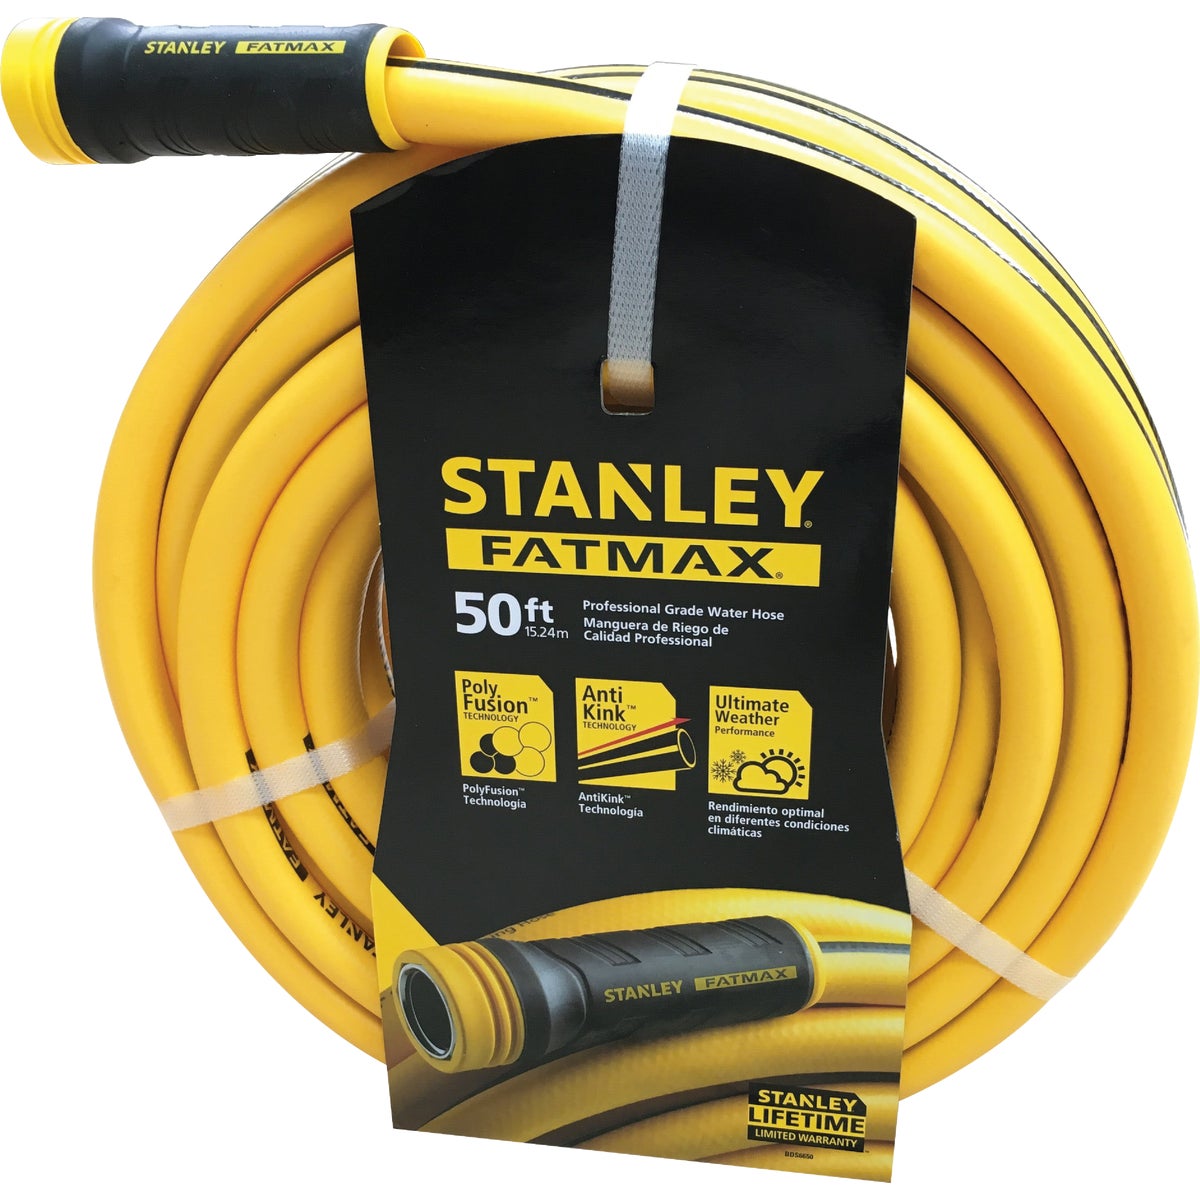 Item 705294, FatMax polyfusion technology professional grade hose.